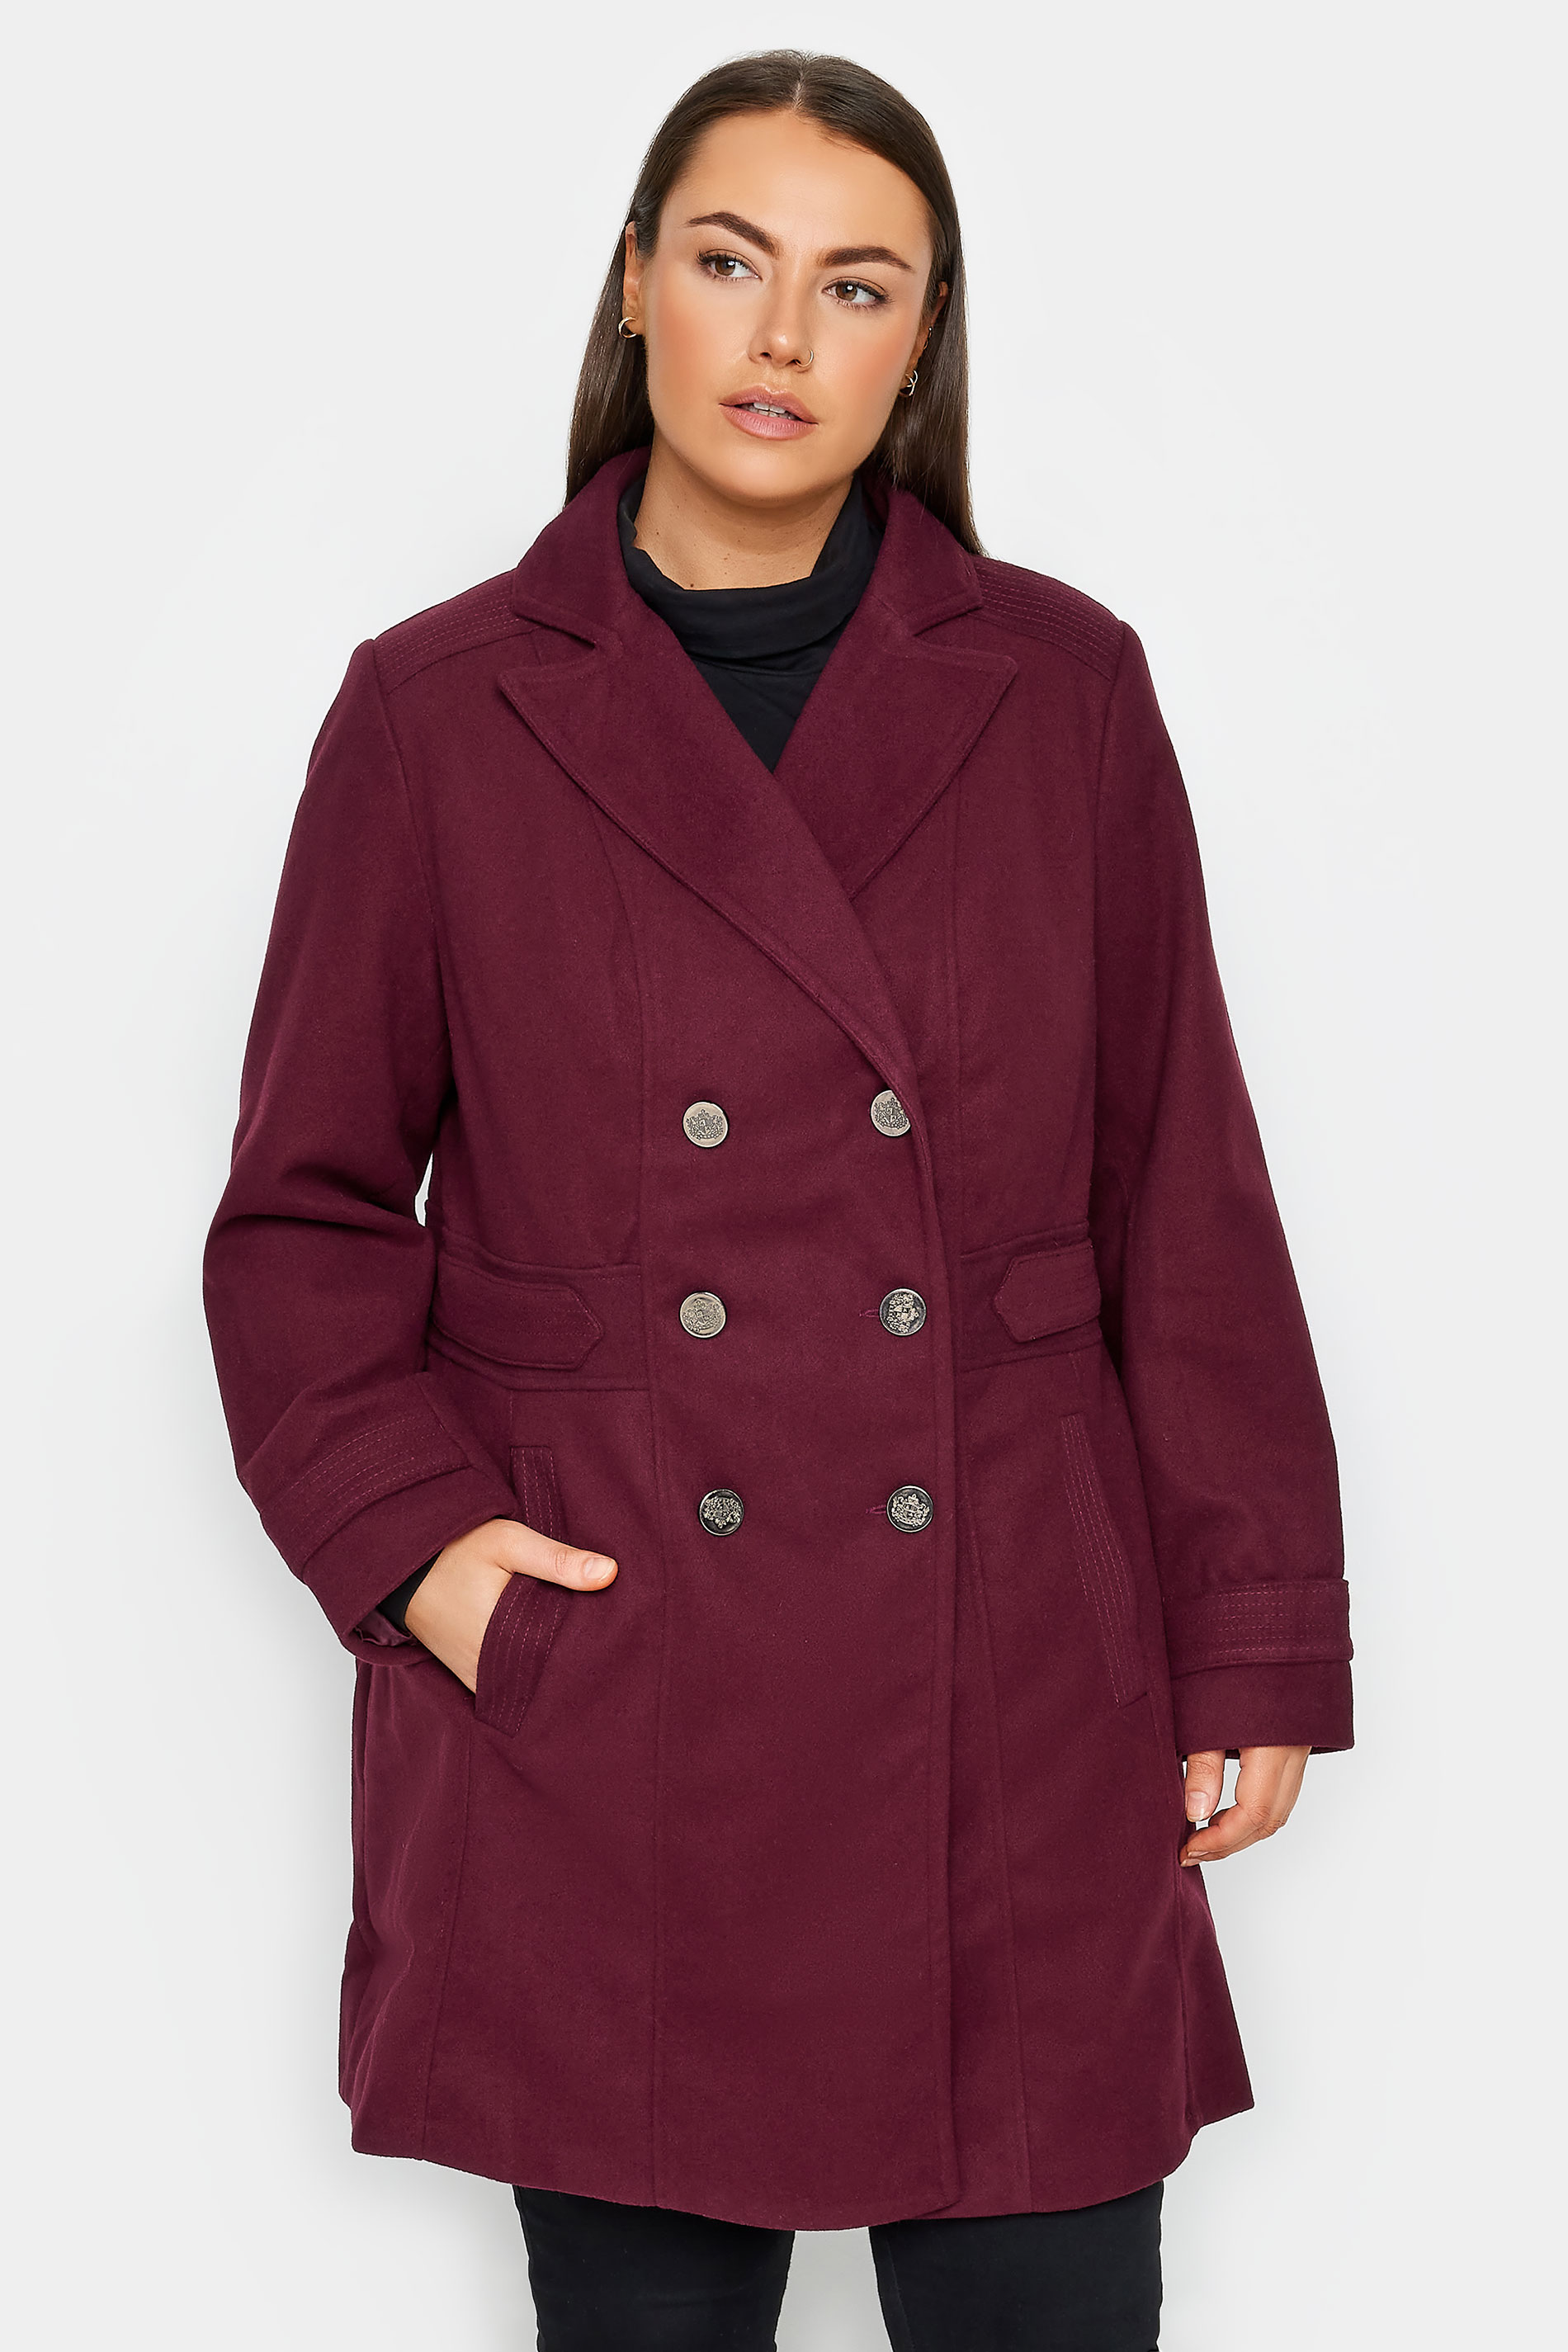 Avenue Burgundy Red Collared Formal Coat | Evans 1